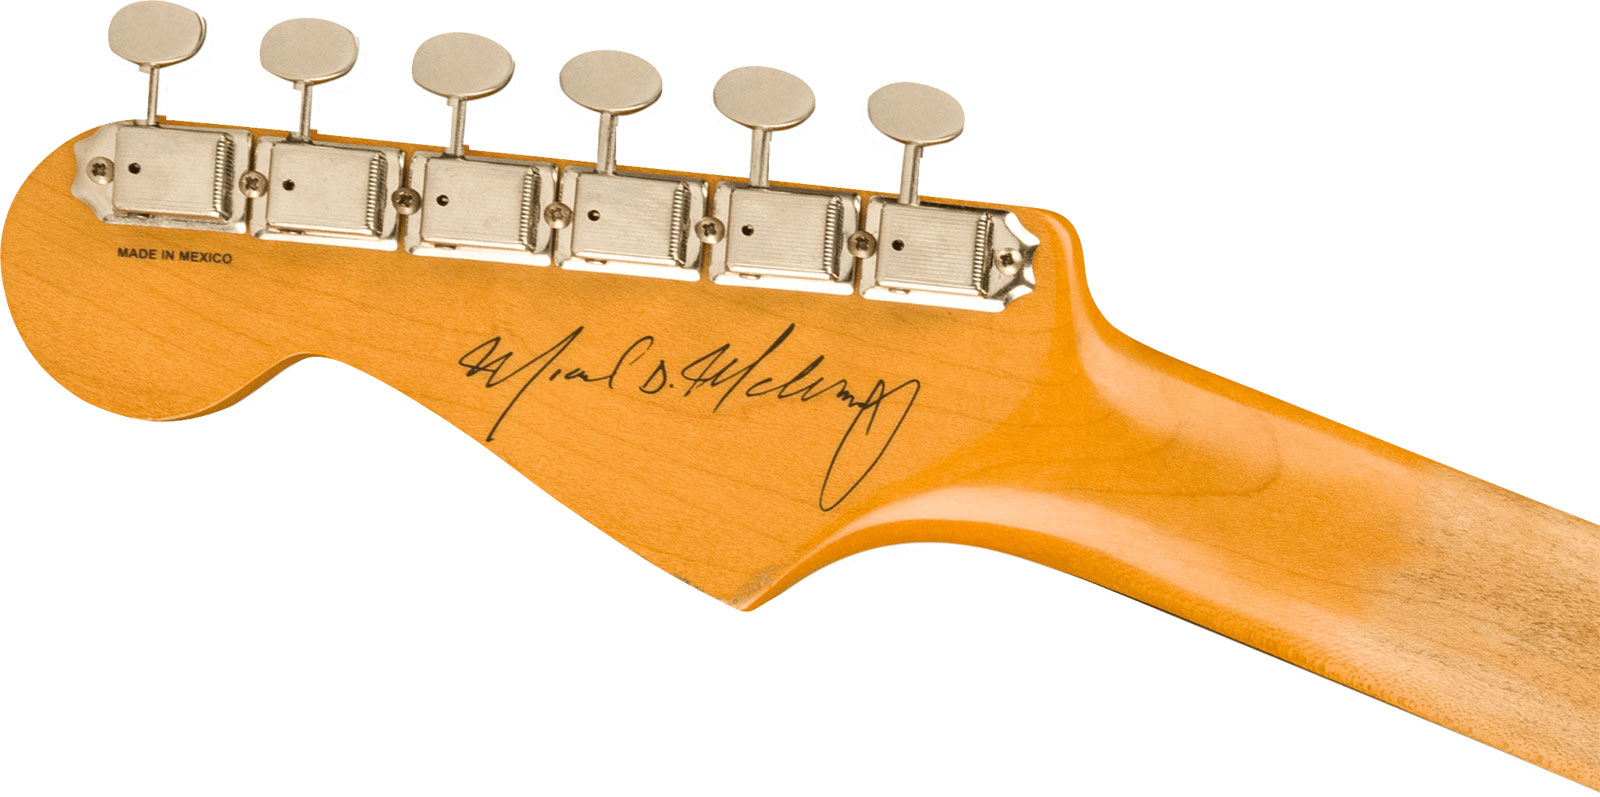 Fender Mike Mccready Strat Mex Signature 3s Trem Rw - Road Worn 3-color Sunburst - Signature electric guitar - Variation 3